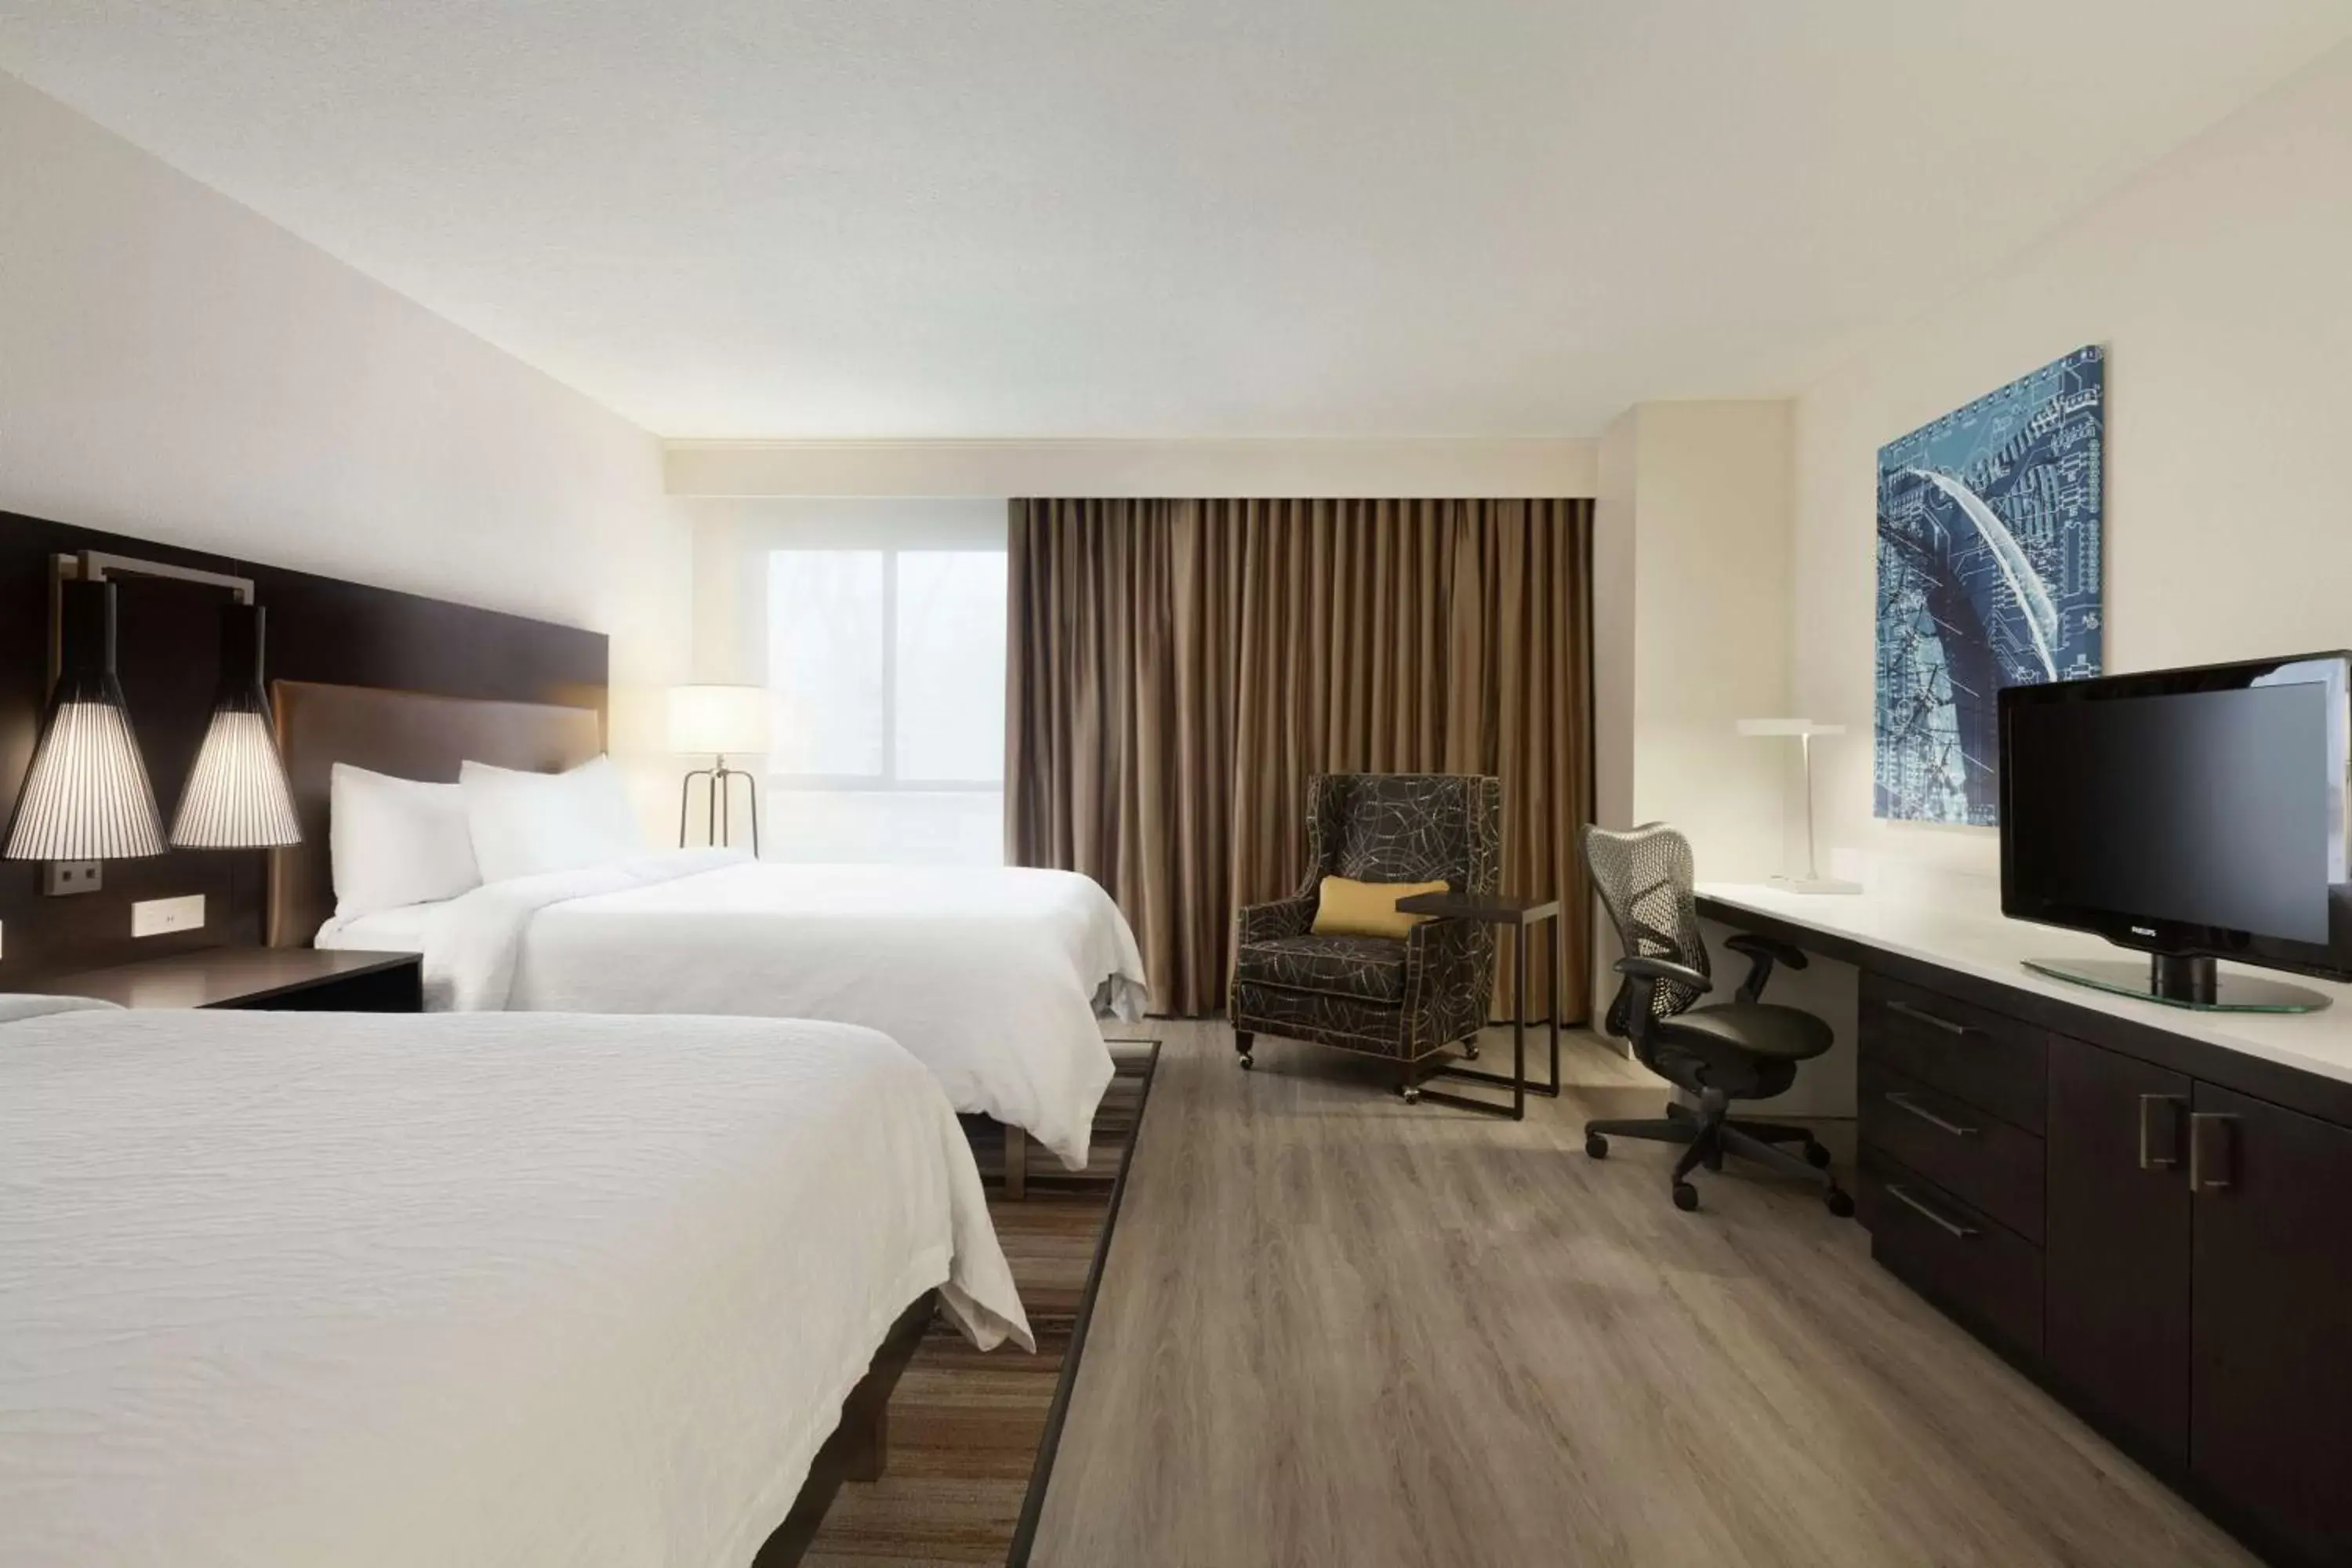 Premium Queen Room with Two Queen Beds in Hilton Garden Inn Cupertino